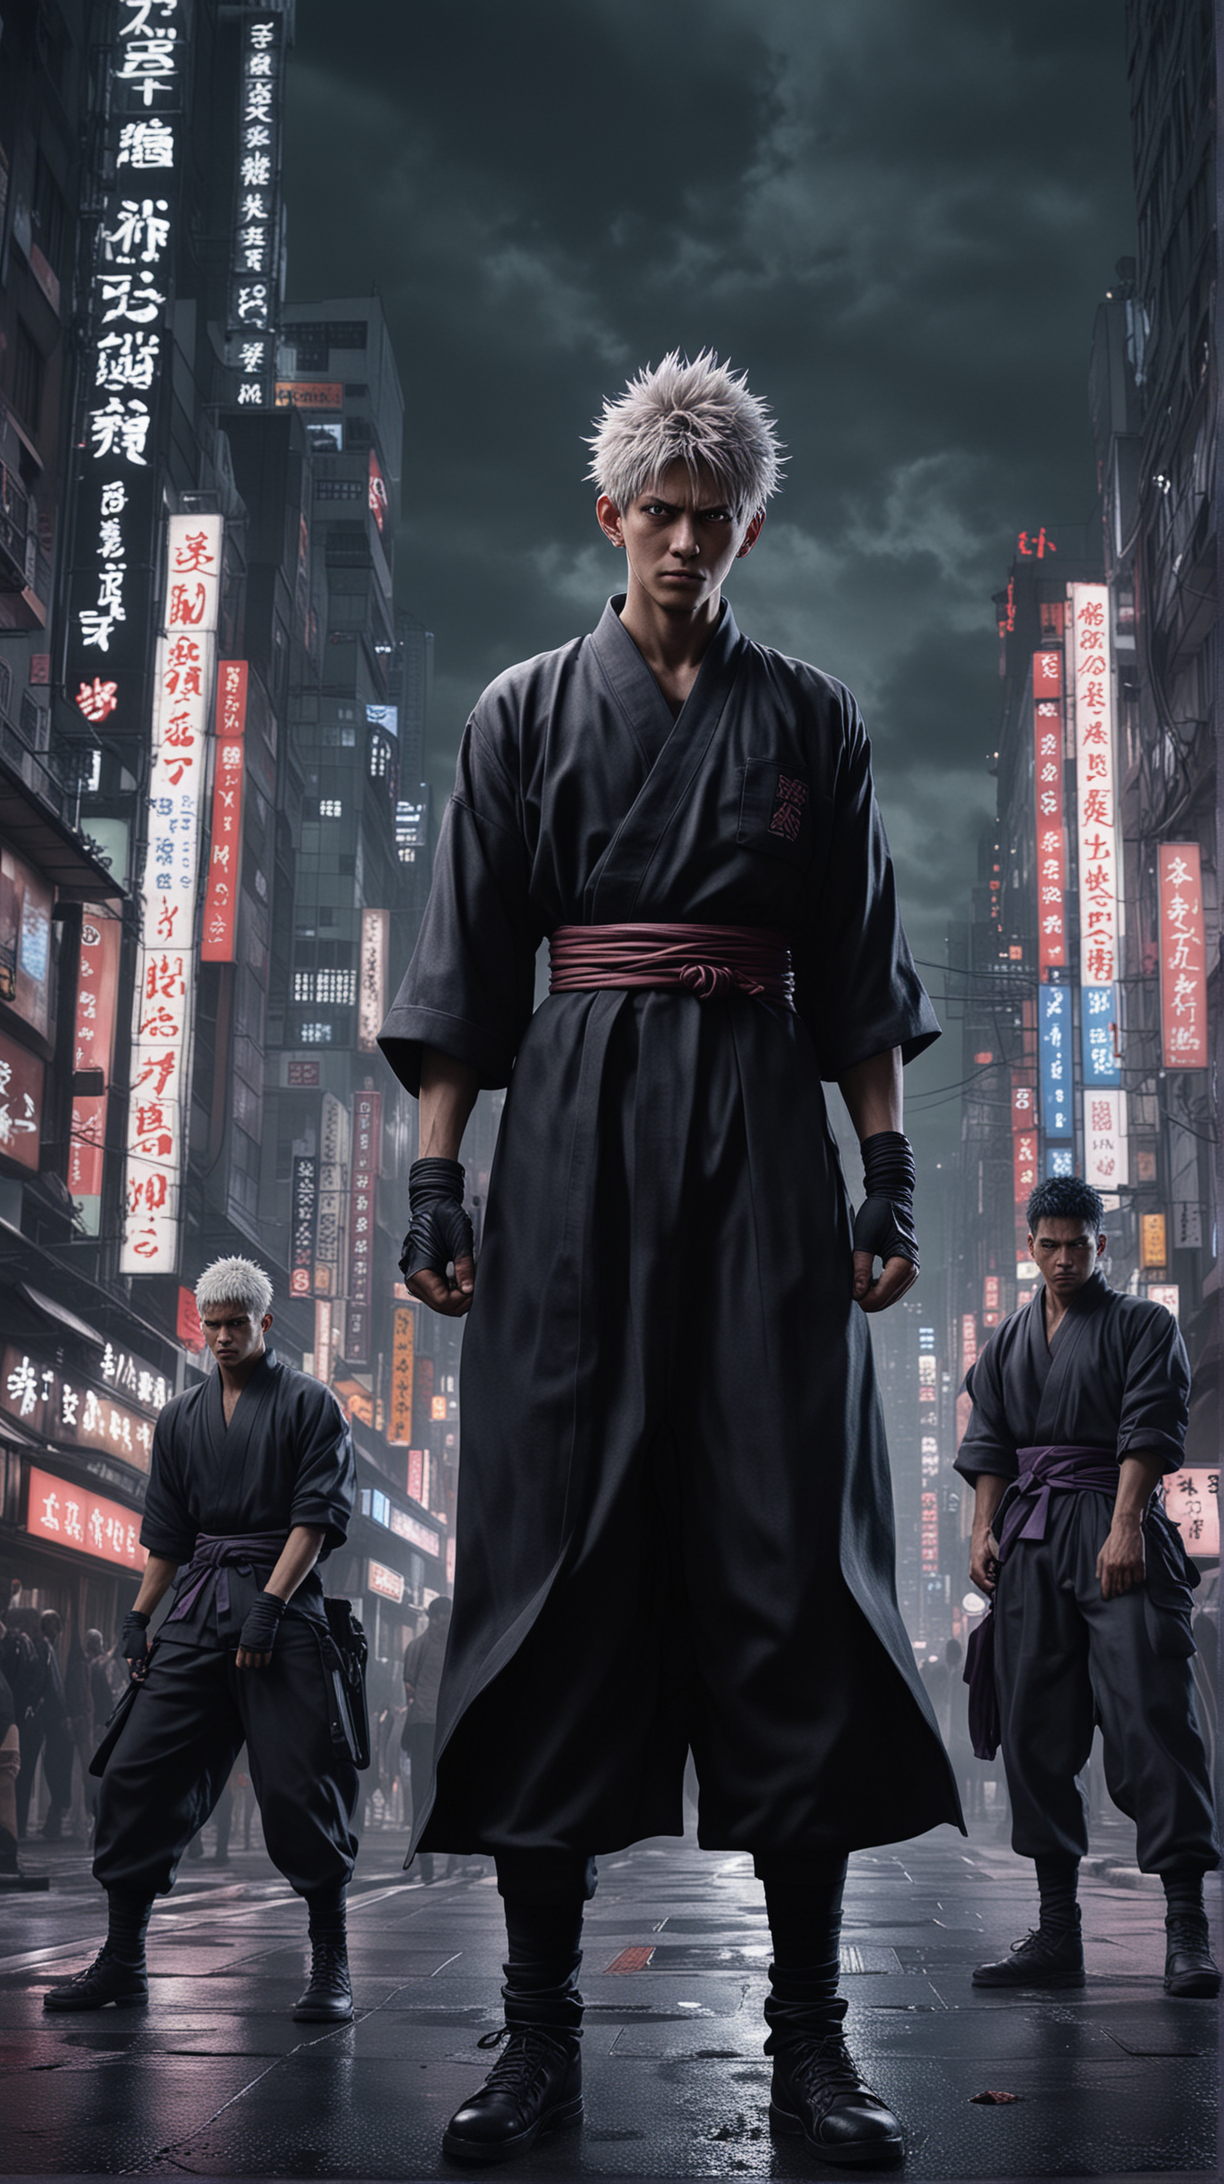 JUJUTSU KAISEN demons, dark tokyo city on background, hyper-realistic, photo-realistic